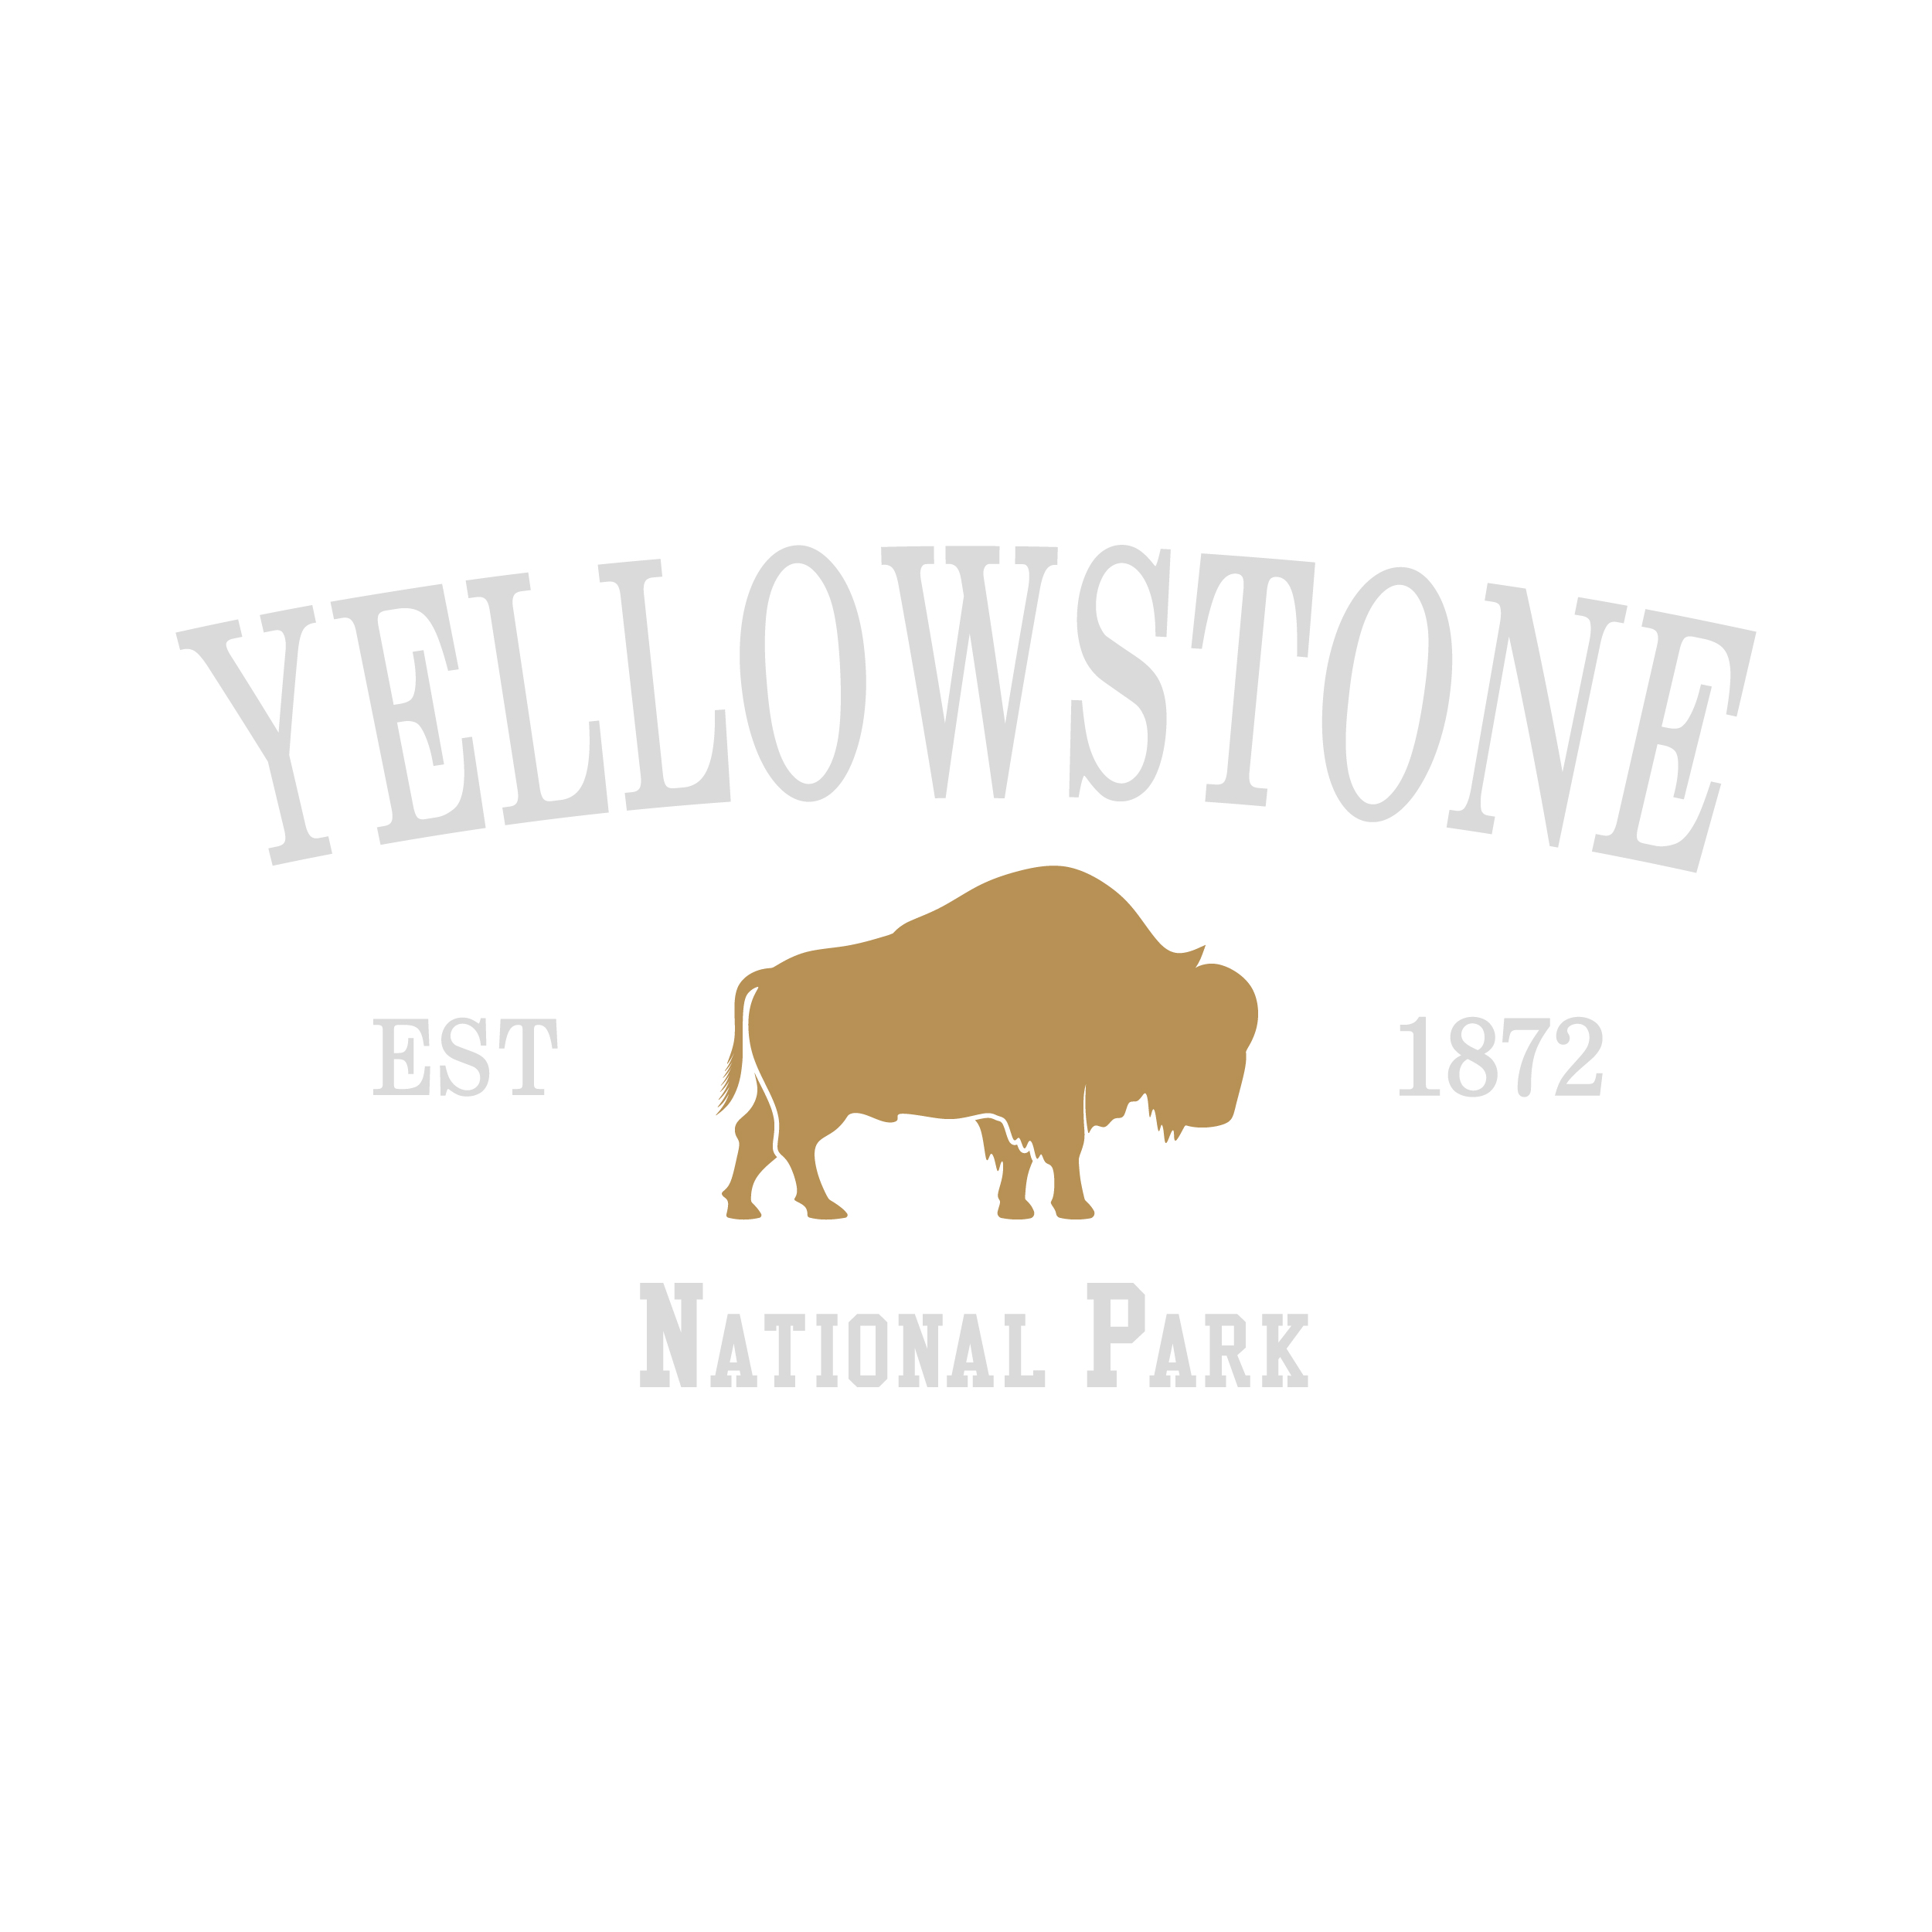 Yellowstone National Park SVG Bison est 1872